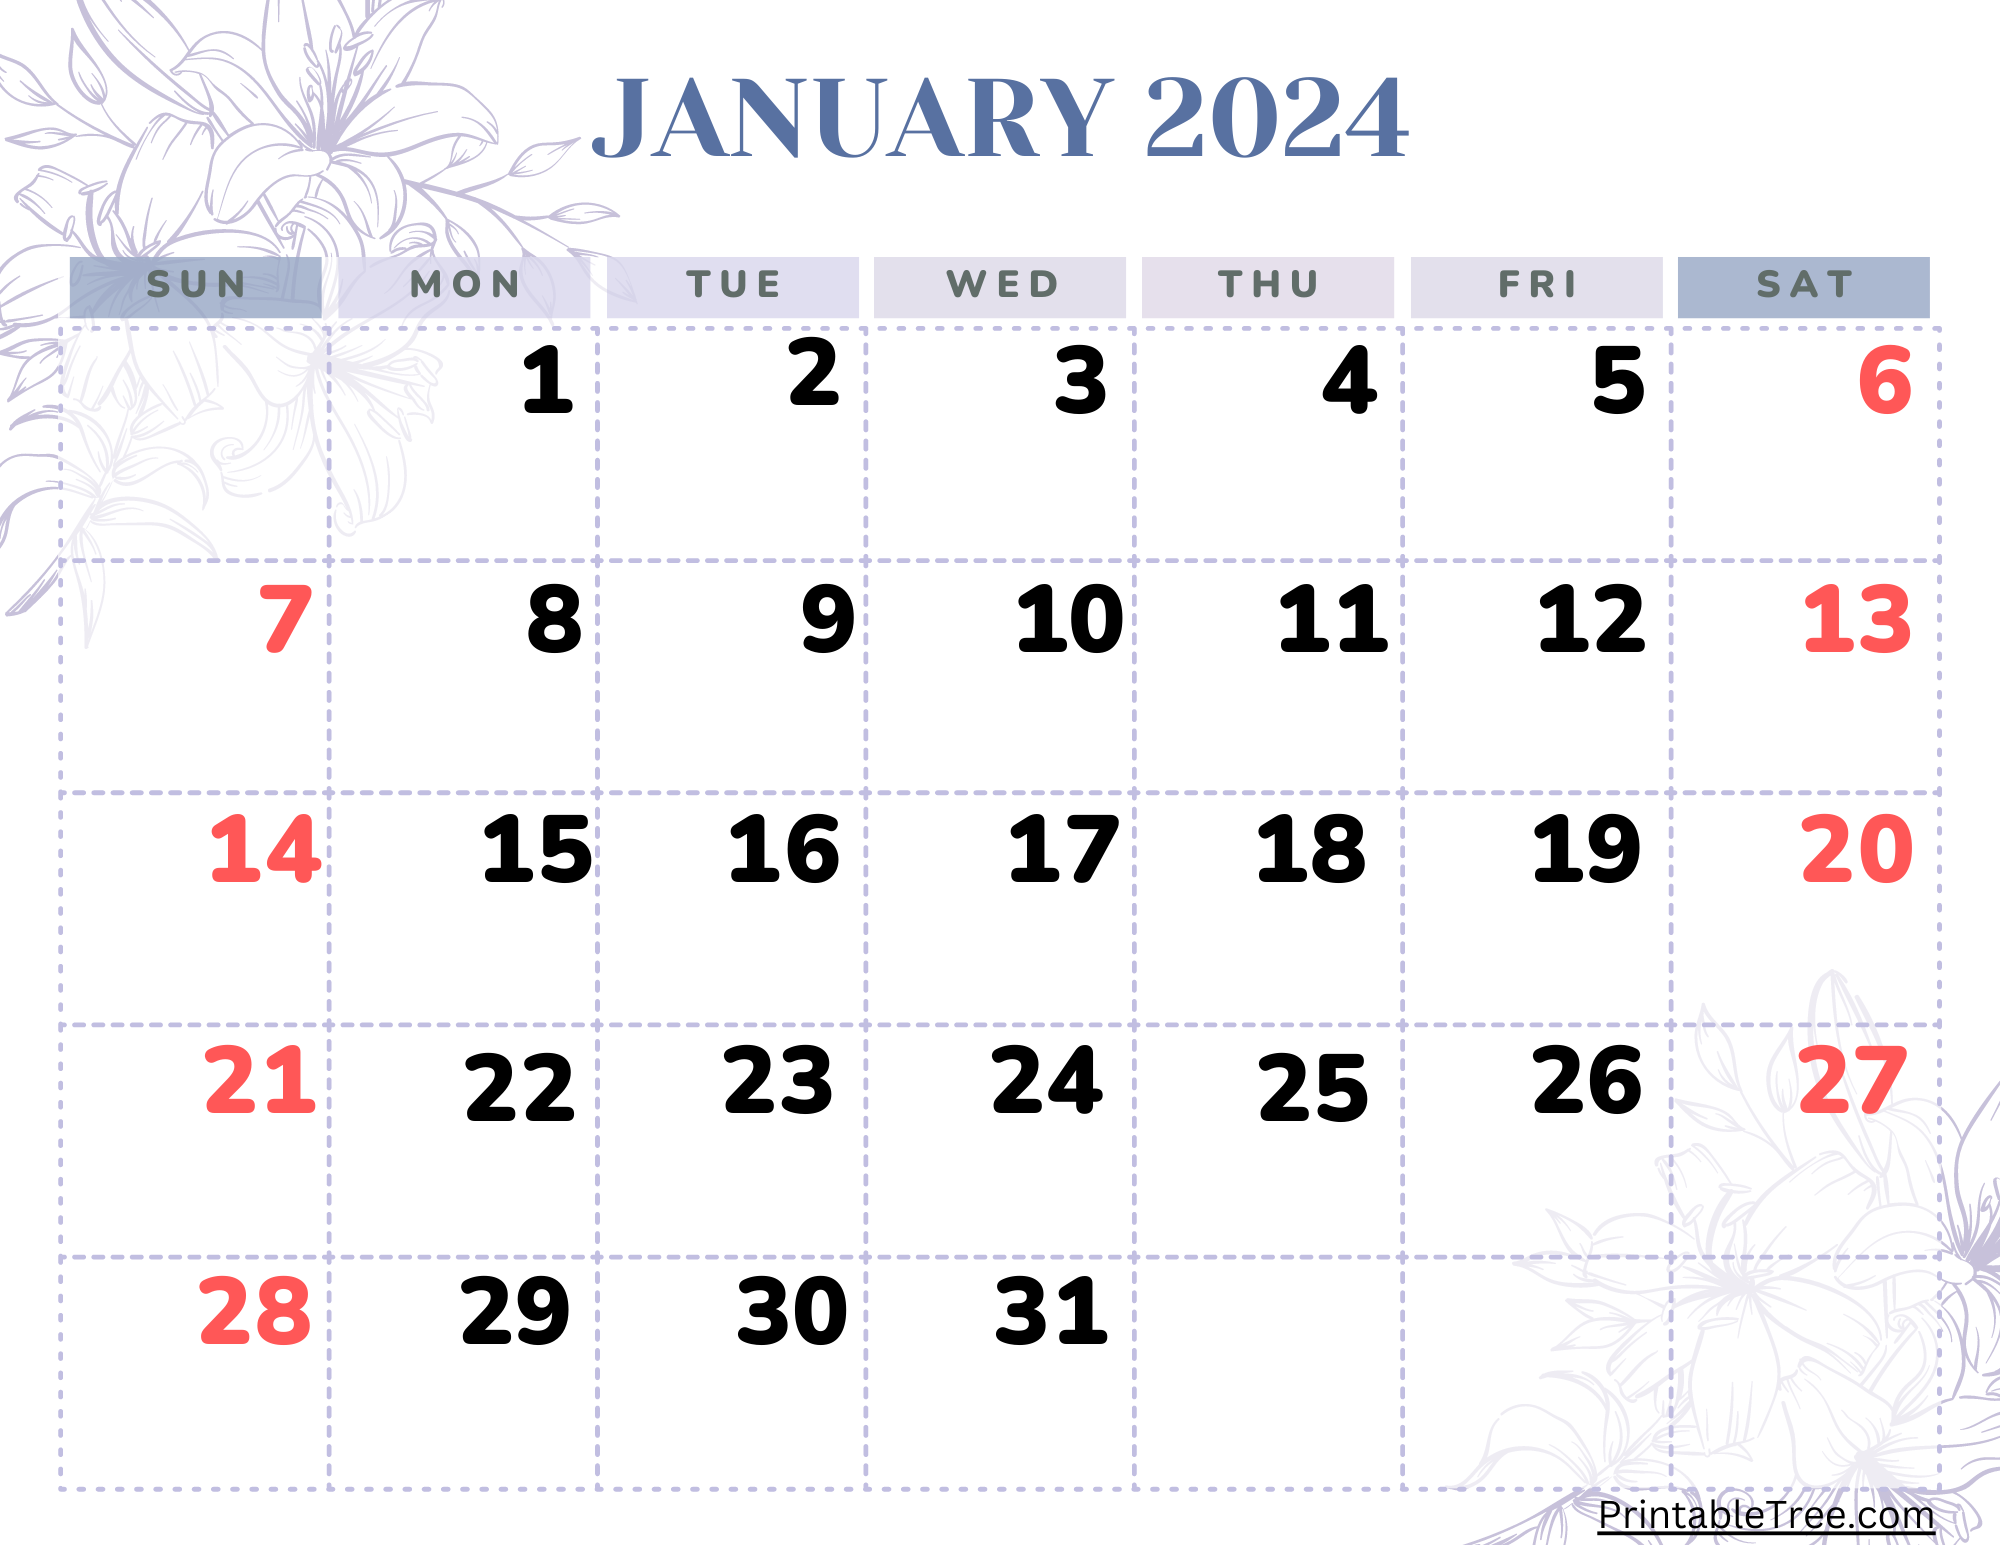 January 2024 Calendar Printable Pdf Template With Holidays with regard to Free Printable Calendar 2024 January Purple